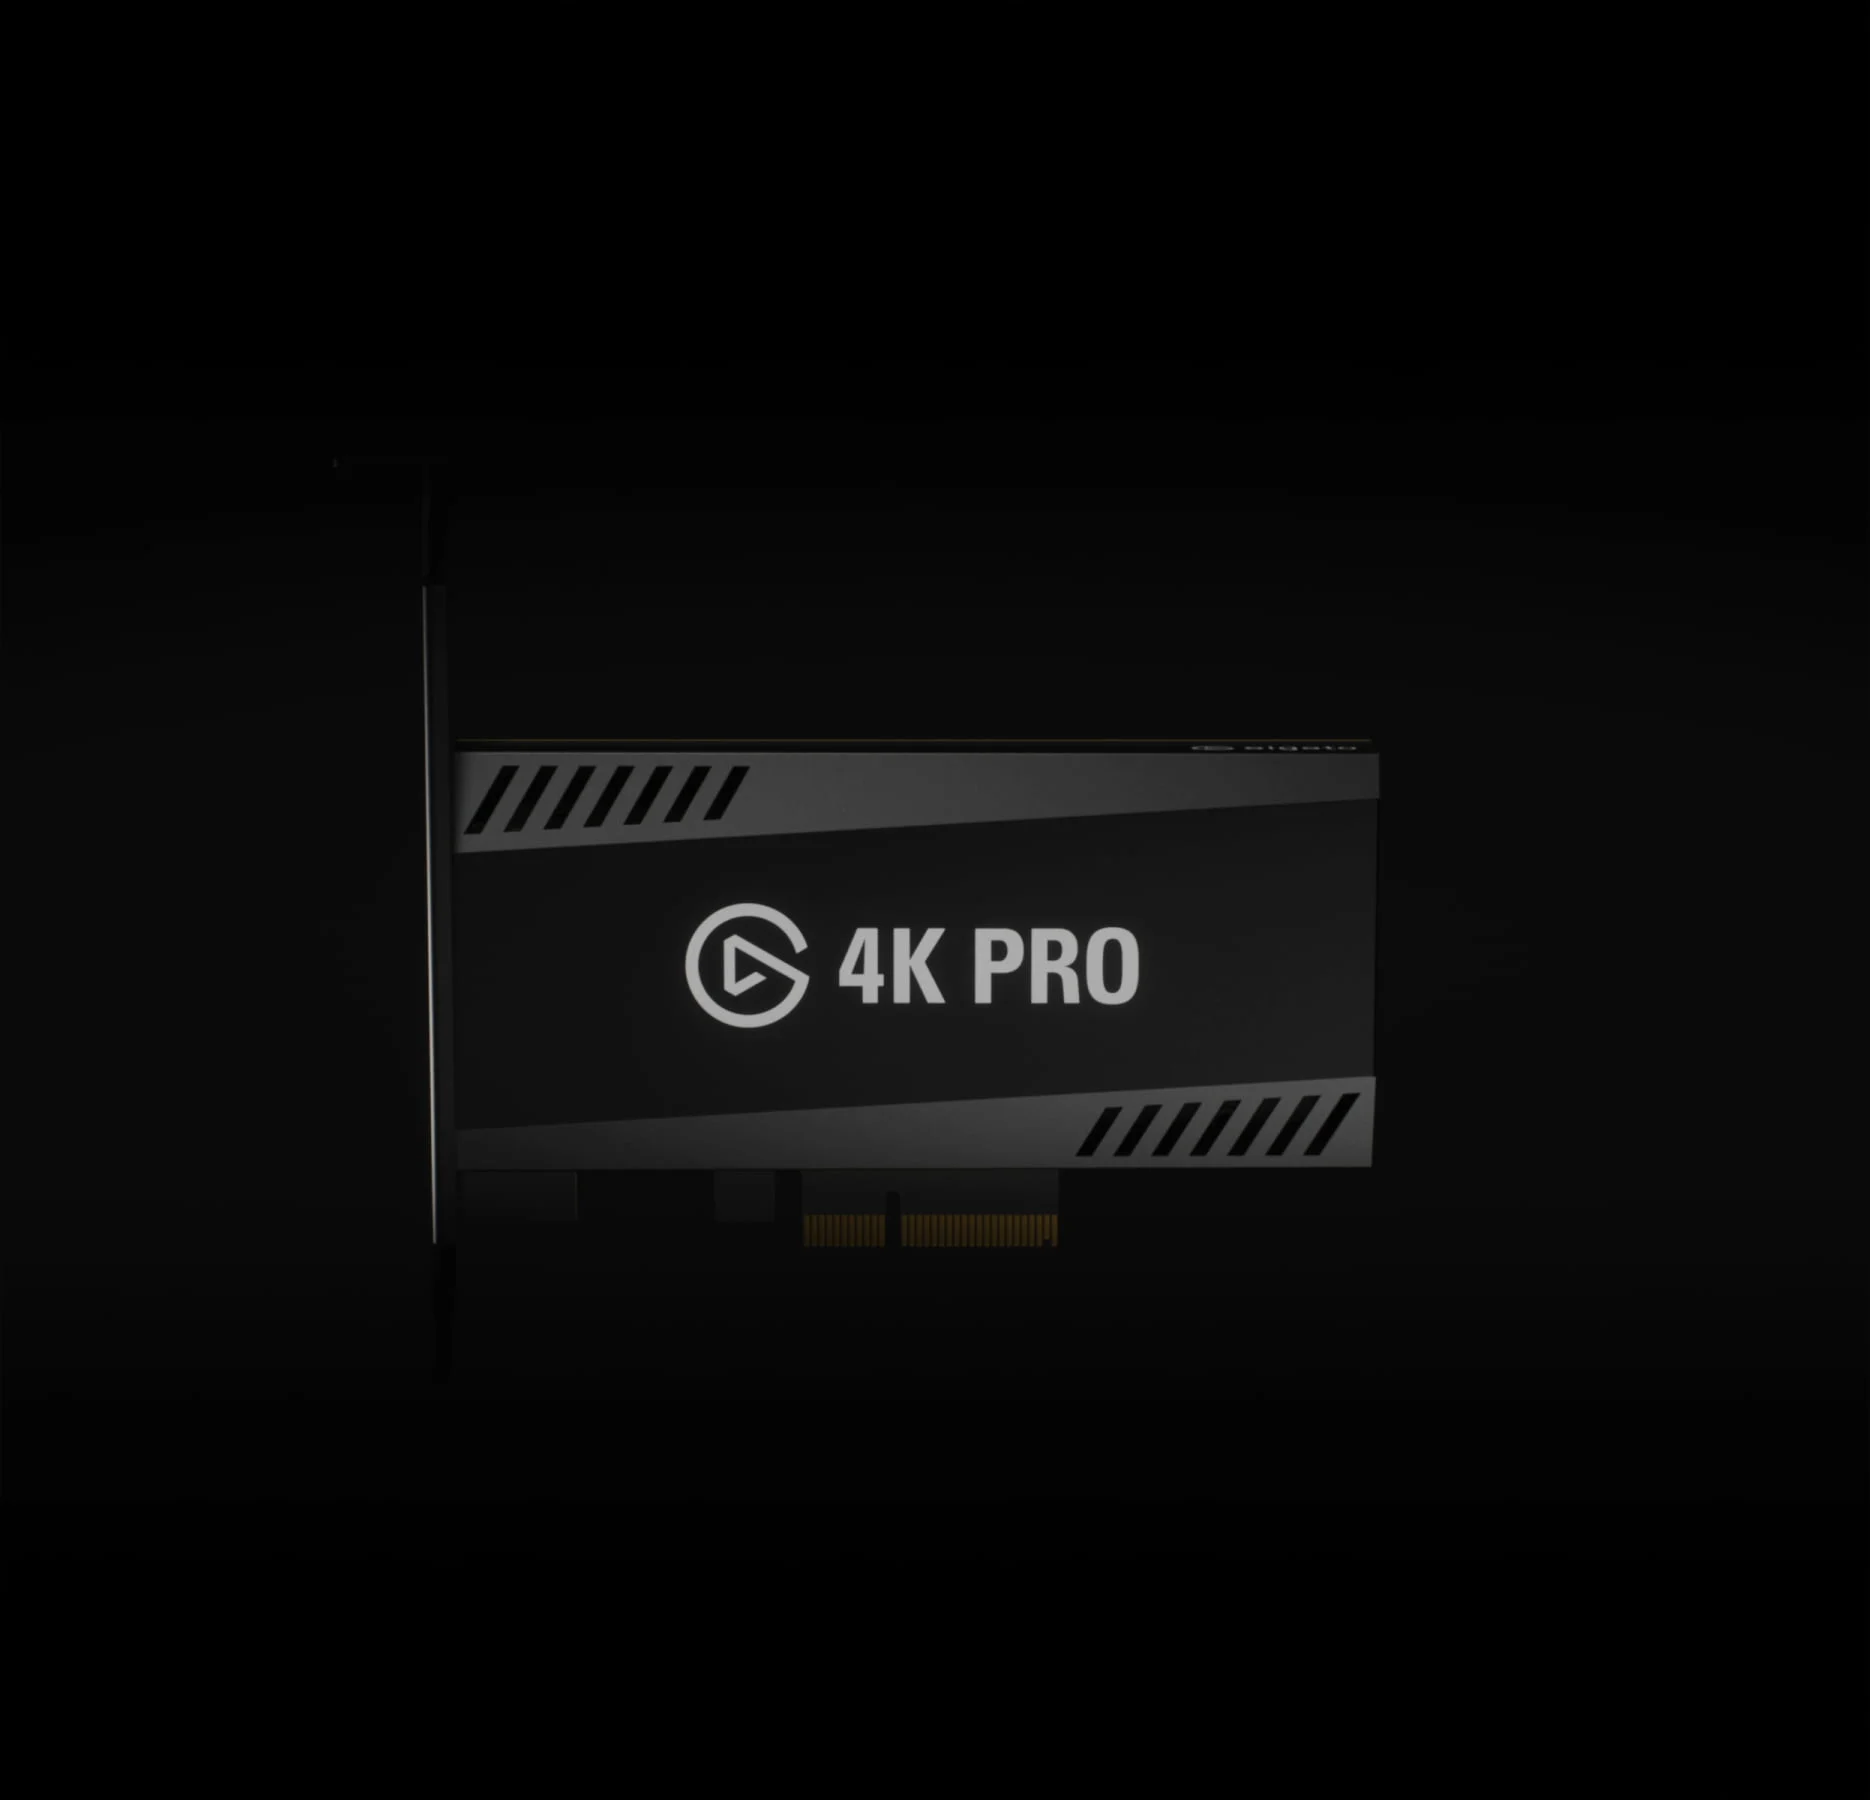 Elgato Game Capture HD60 X - Capturadora de vídeo